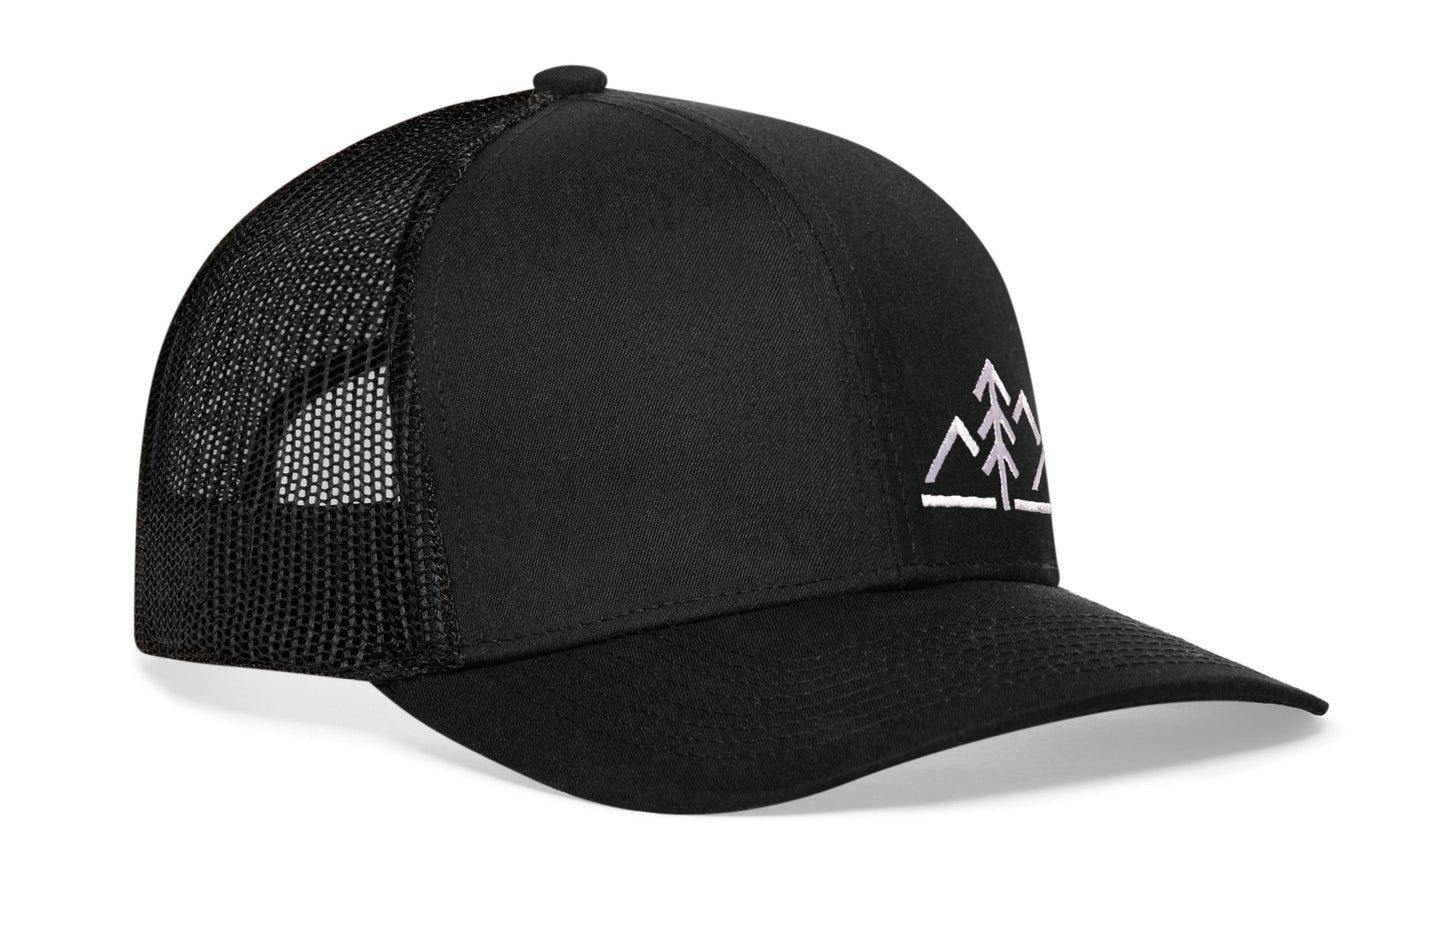 Mountains Trucker Hat  |  Black Outdoors Snapback